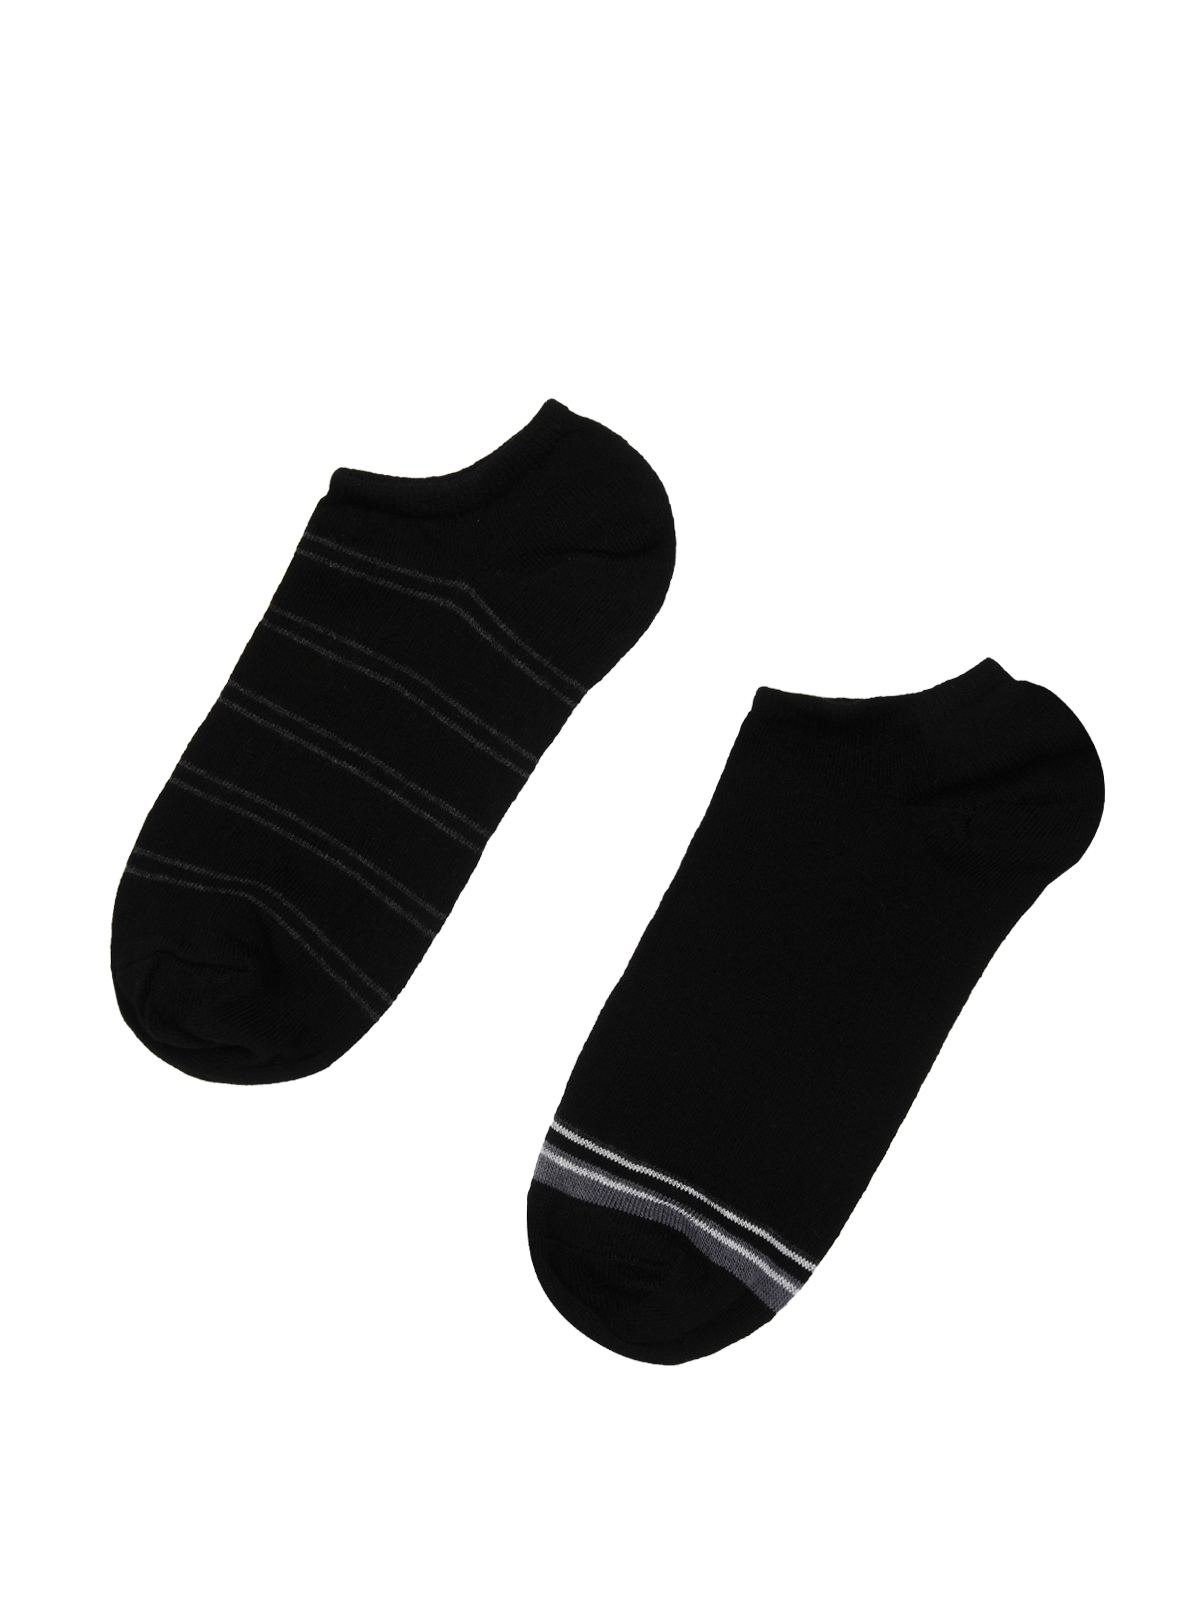 Siyah Erkek Çorap